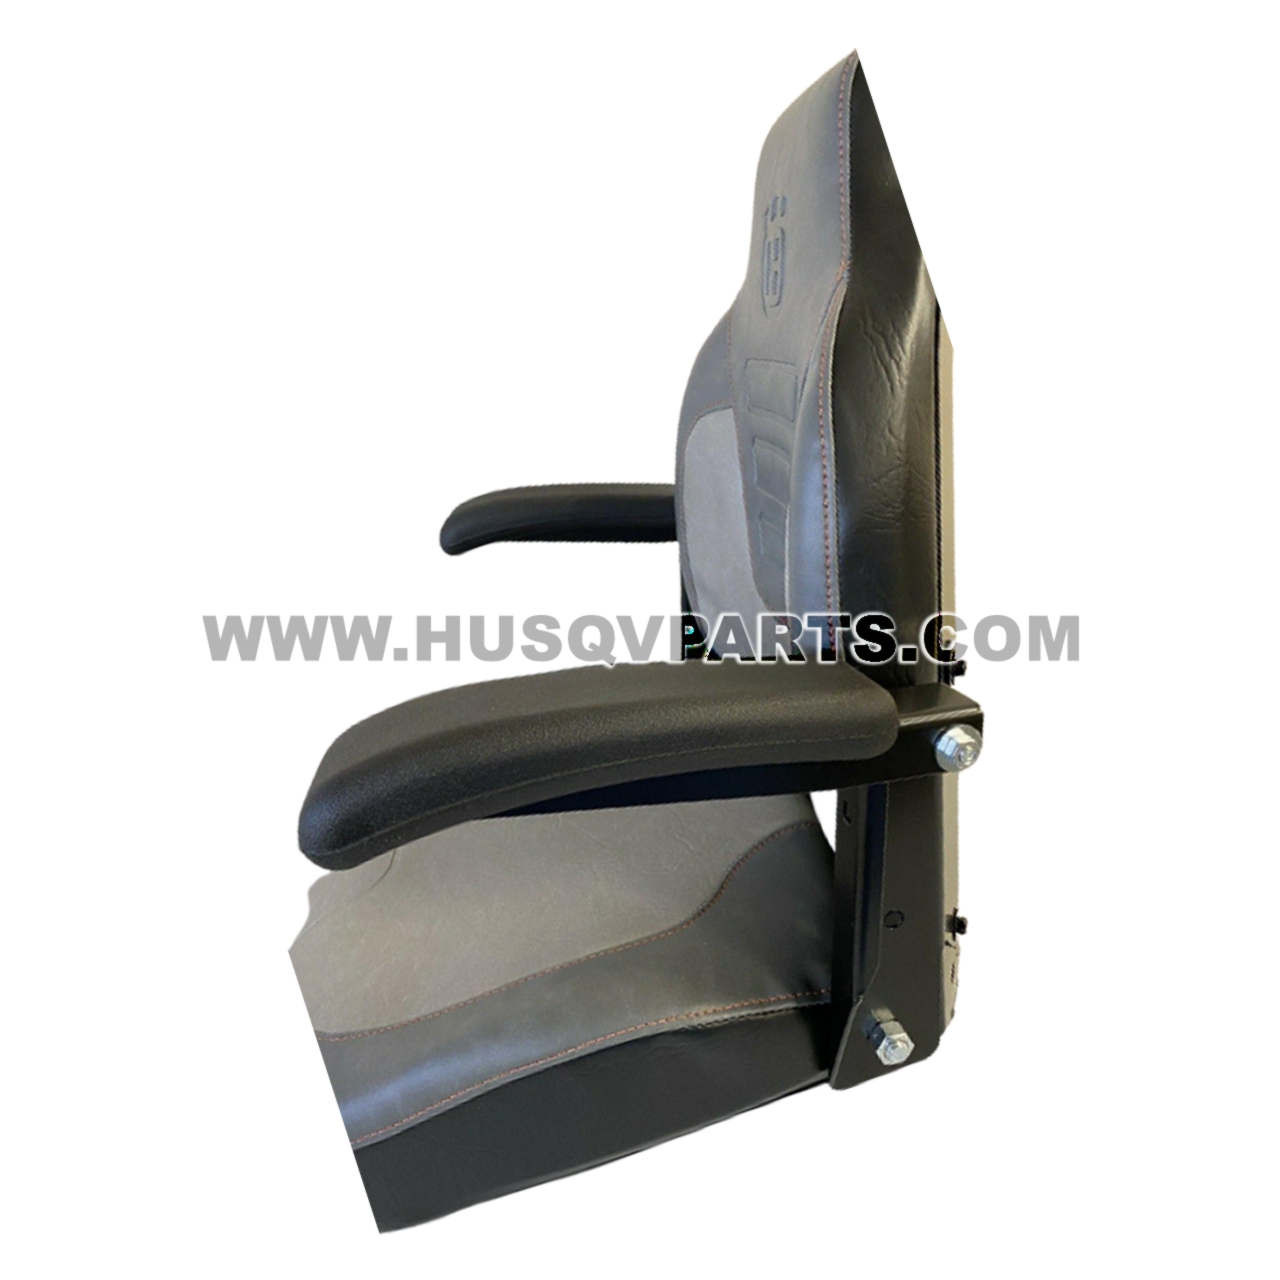 Husqvarna Seat for Zero Turn or Riding Mowers Model: 590873404